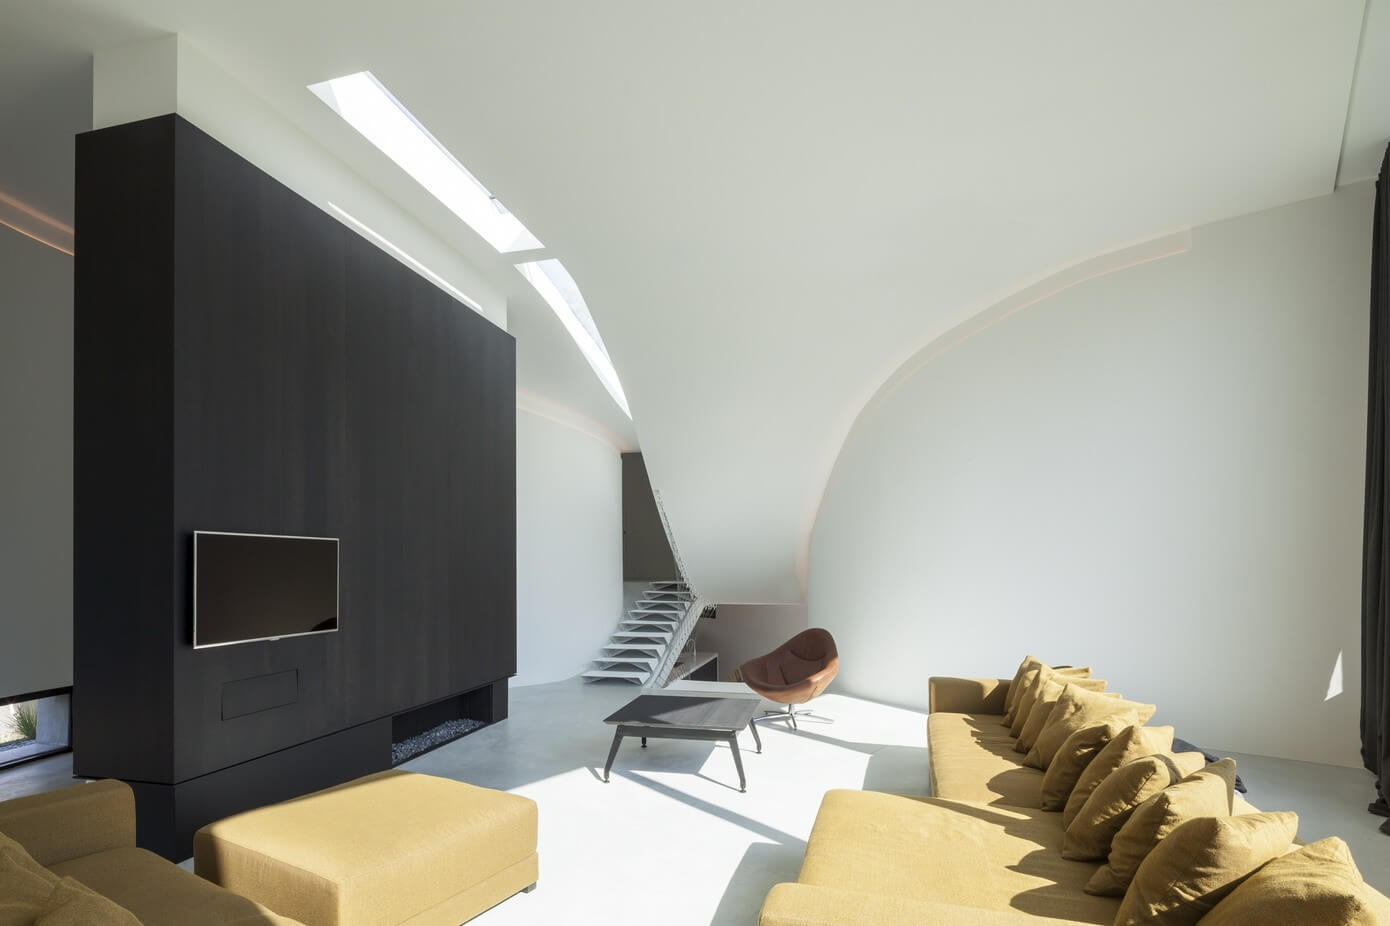 Villa MQ by OOA – Office O Architects